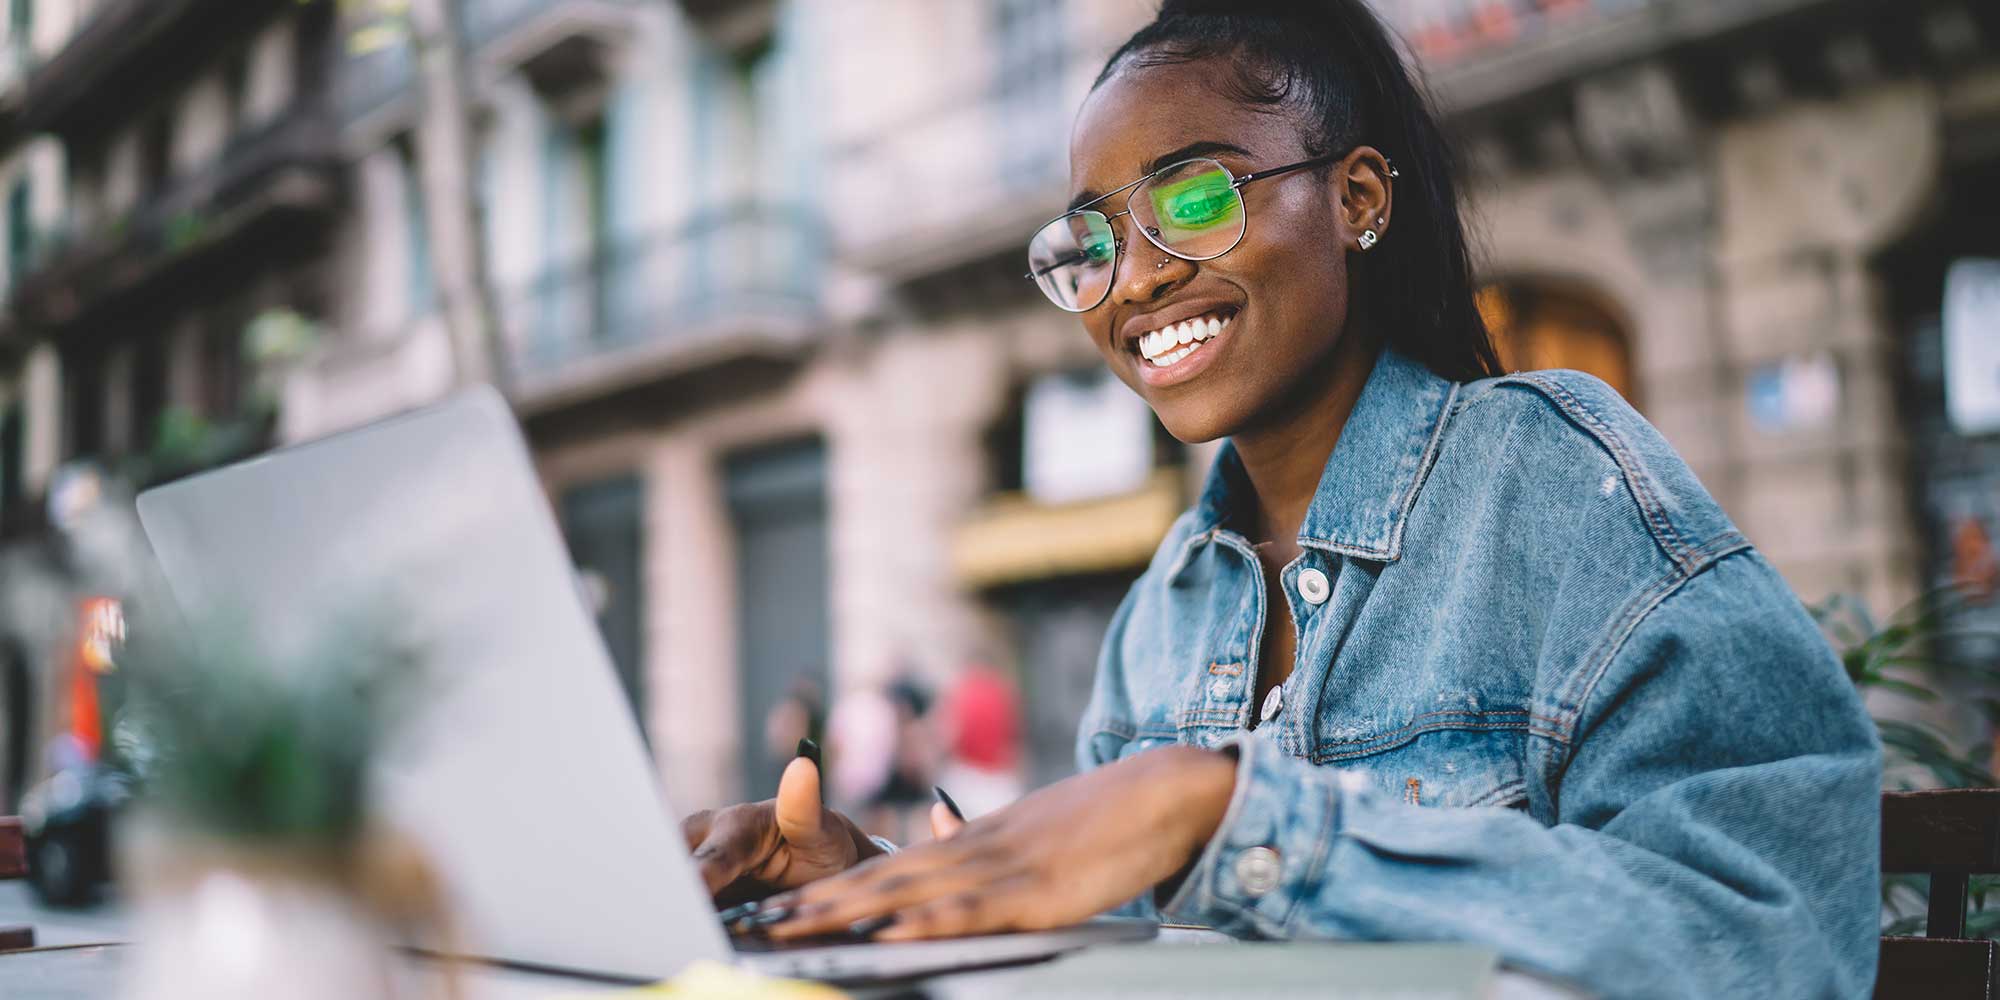 College girl wearing a denim jacket, smiling at her laptop.